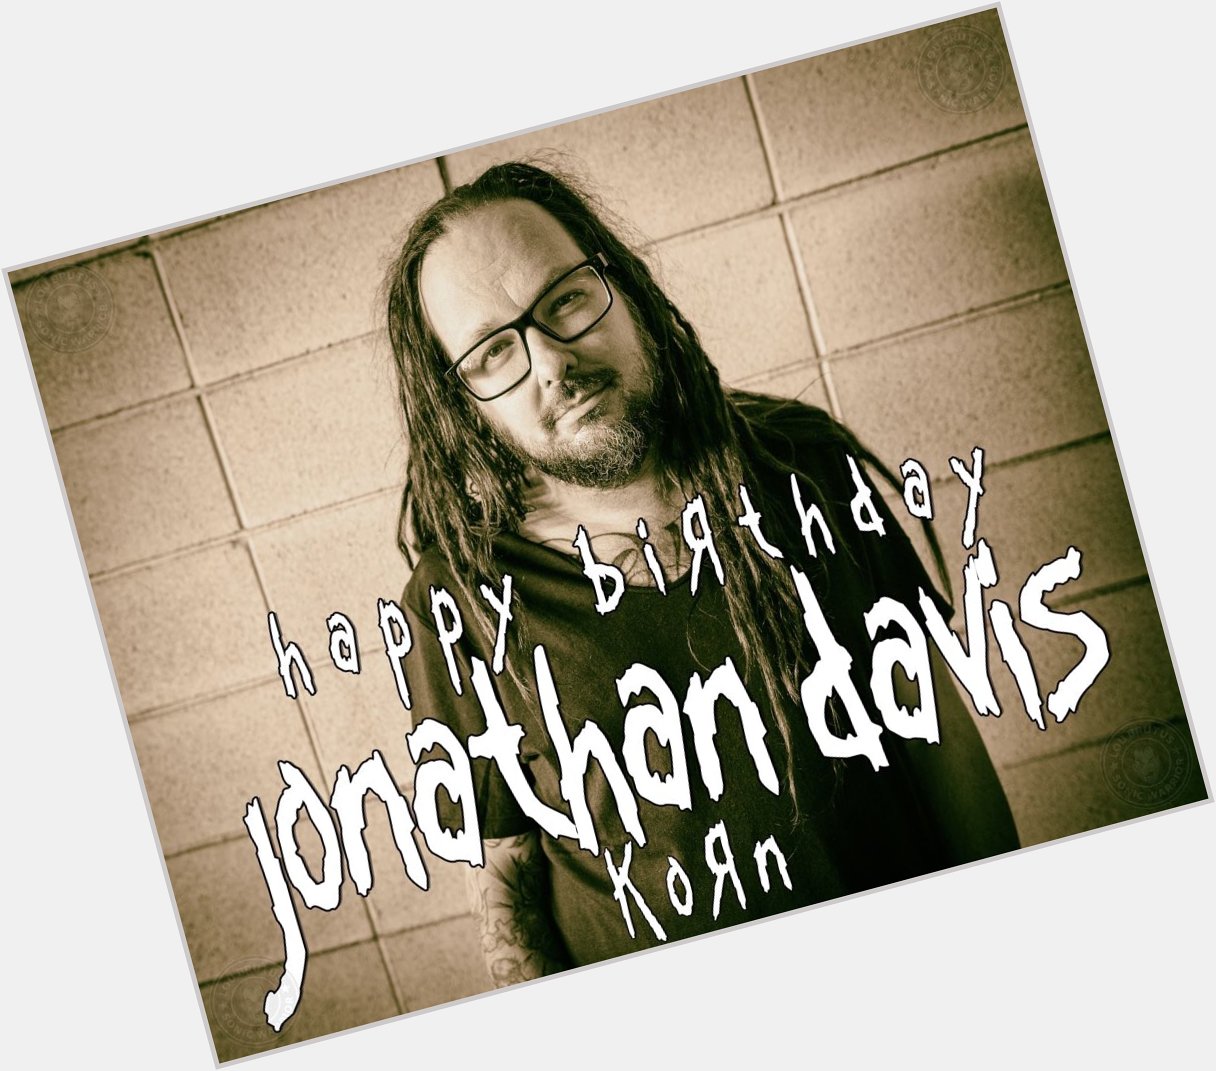 HBD JD: Happy Birthday to Jonathan Davis of Ko n!   